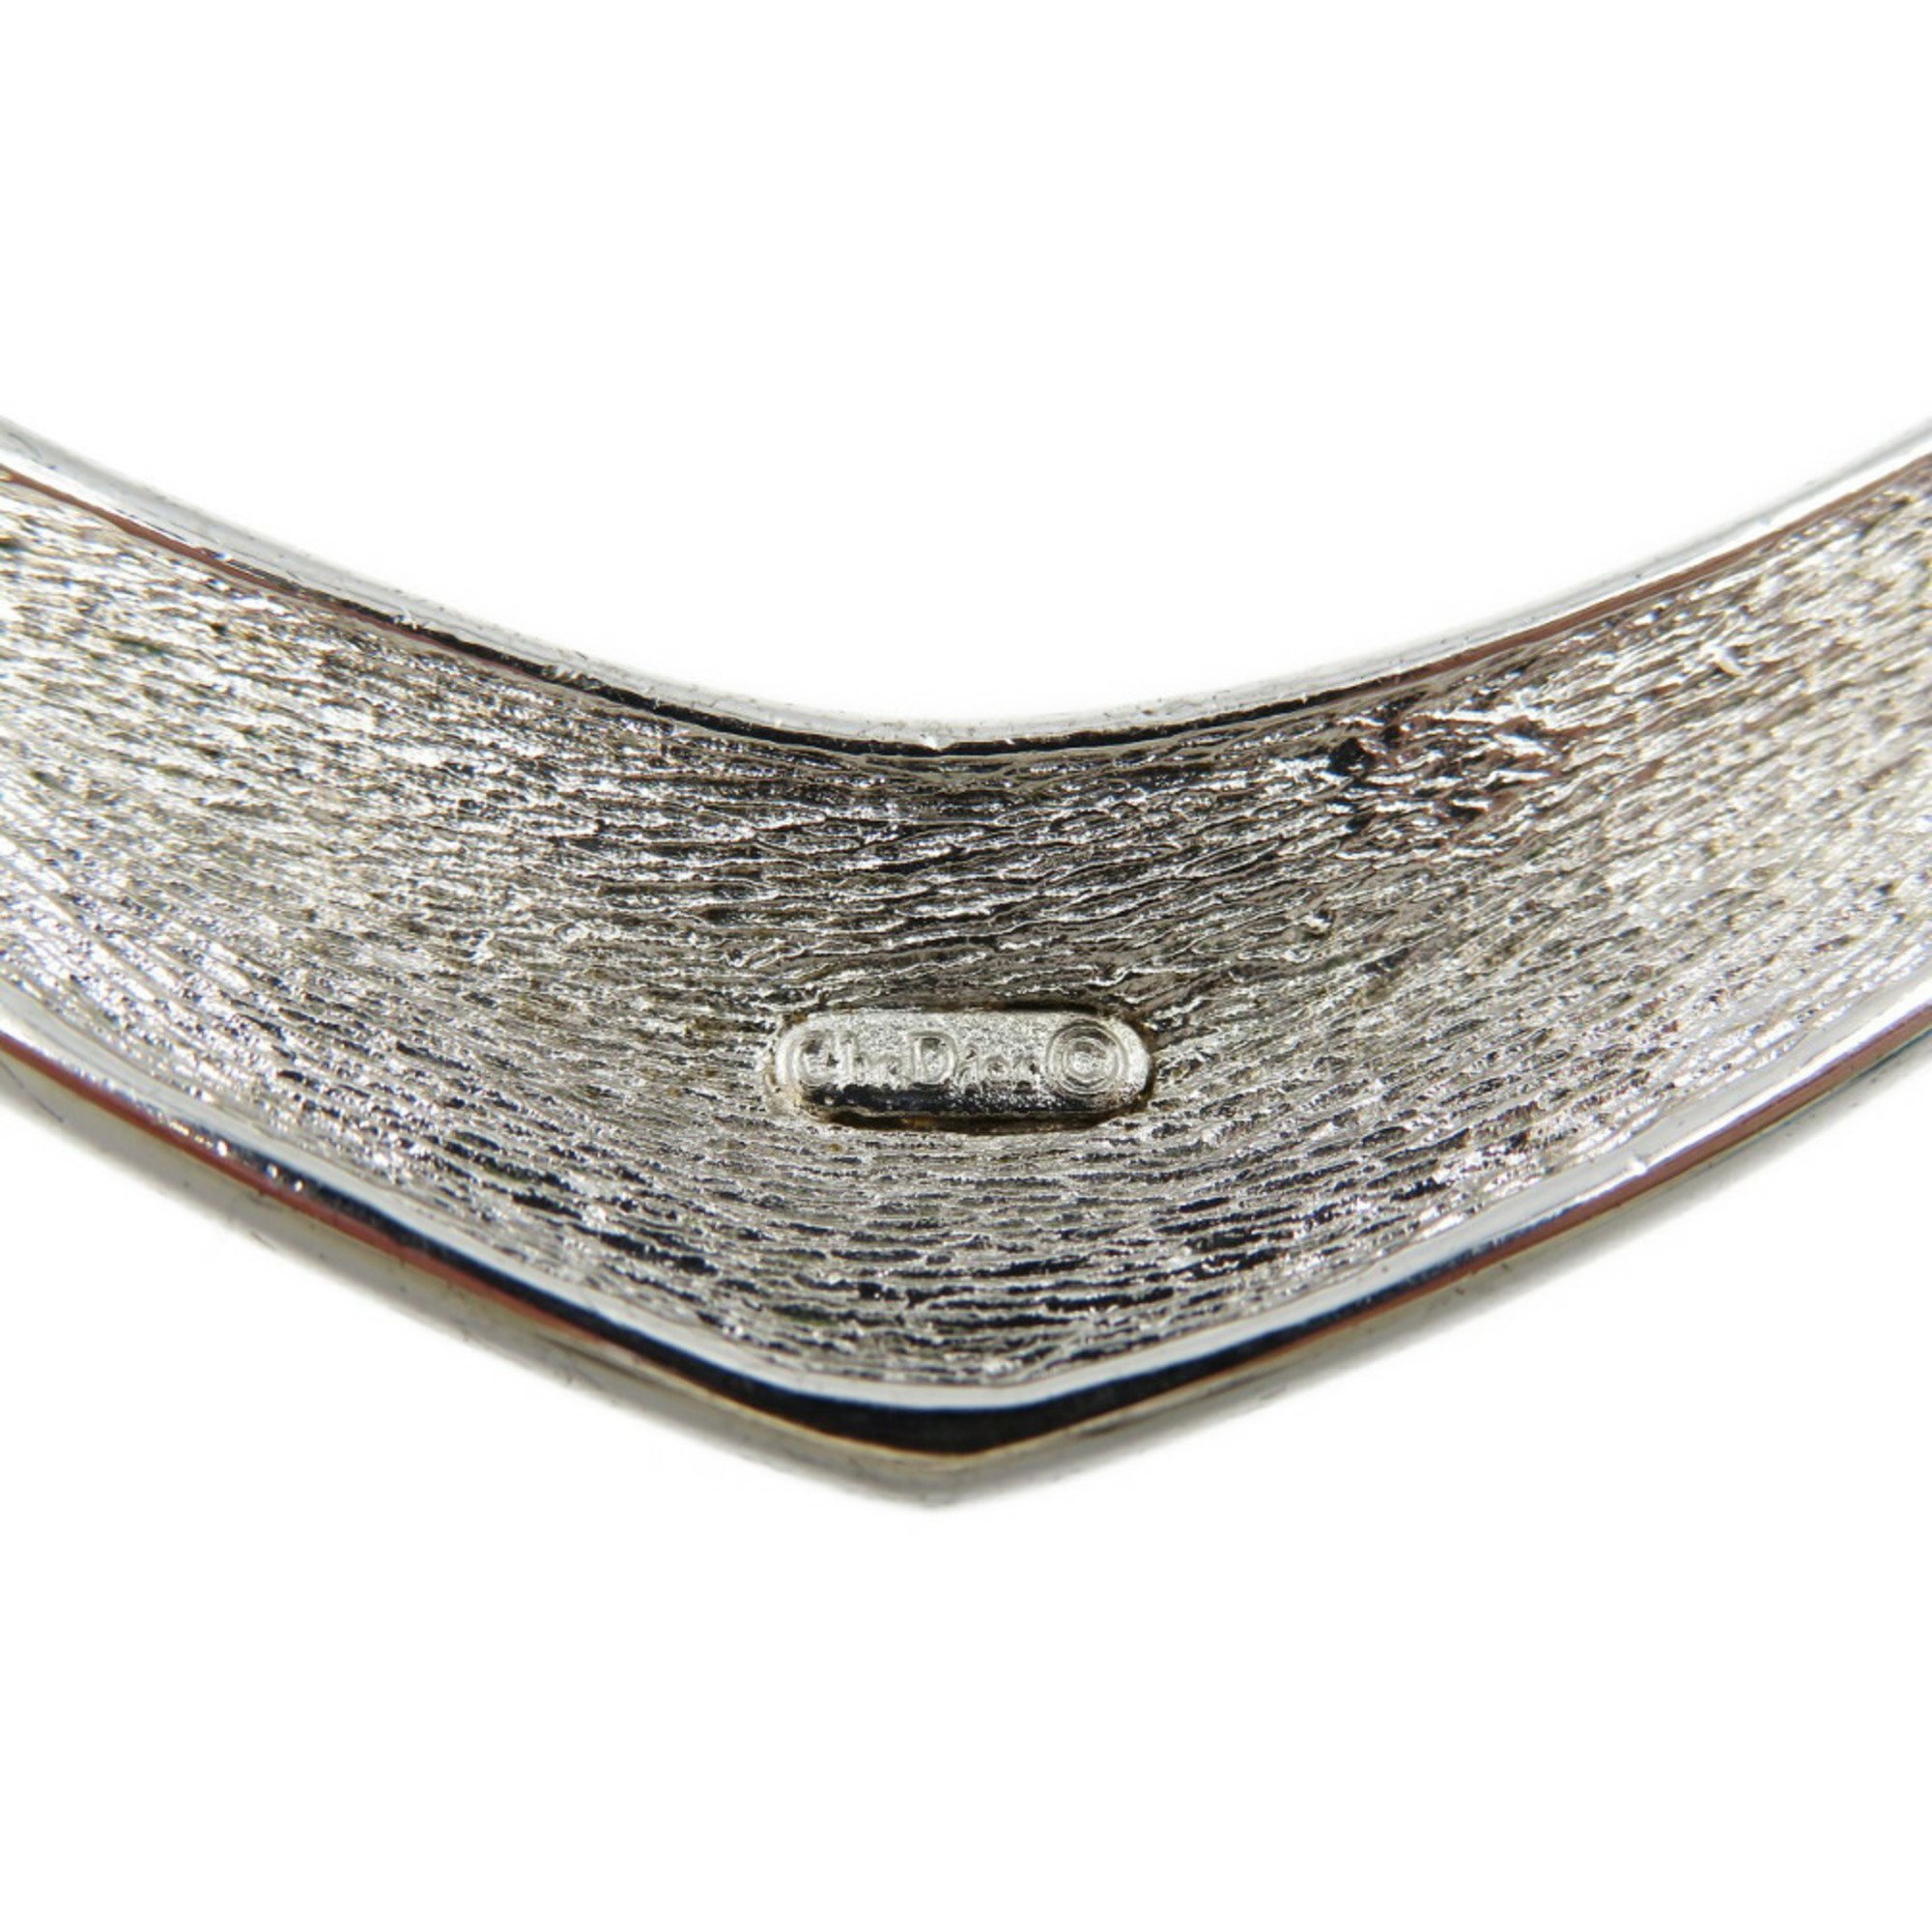 Christian Dior Metal Rhinestone Silver Necklace